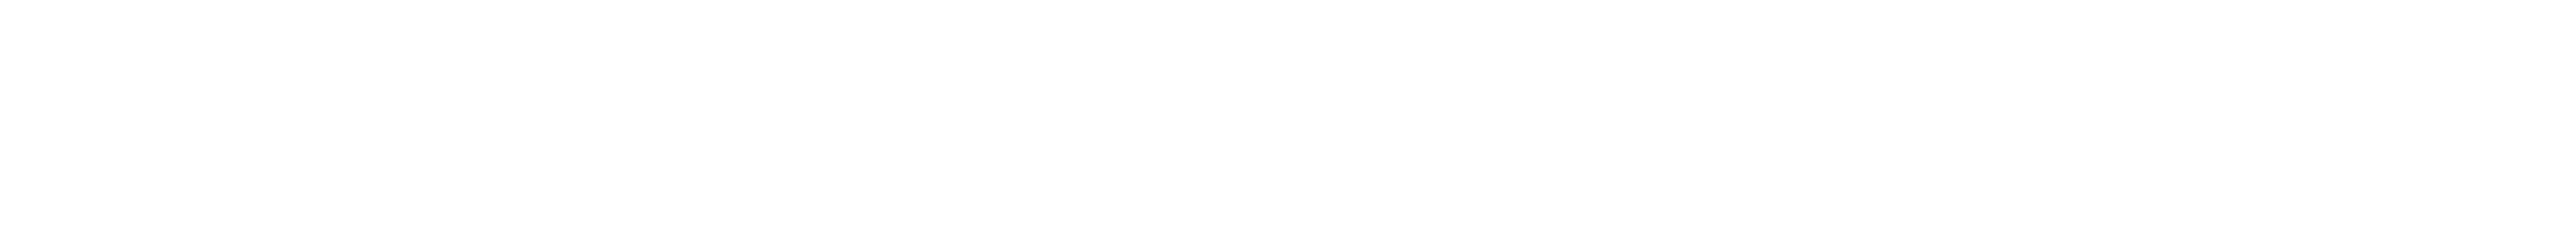 National Institute of Technology Warangal-logo